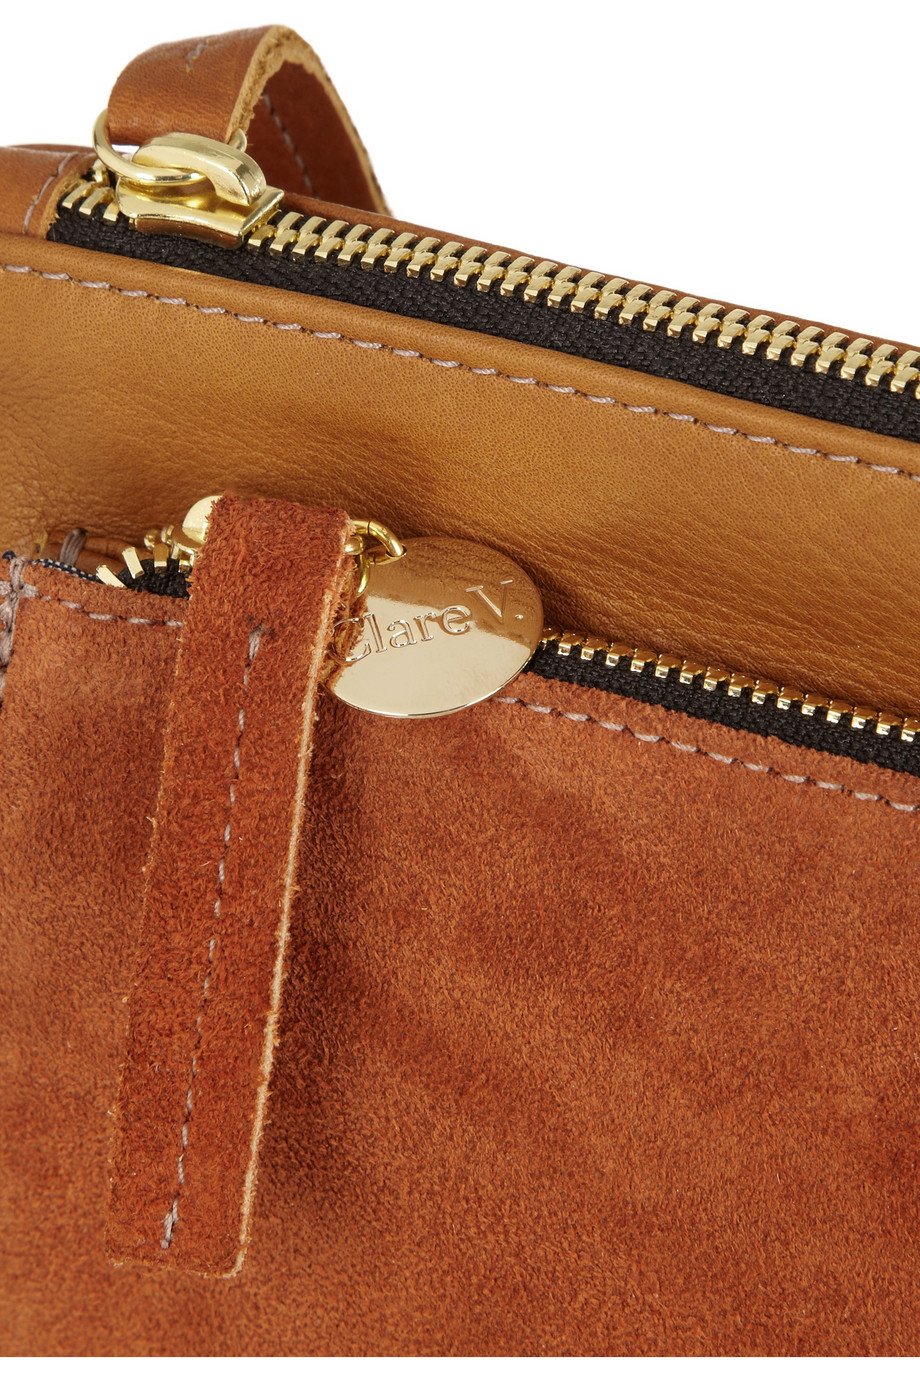 Clare Vivier Clare V Gosee Washed Leather And Suede Shoulder Bag, $340, NET-A-PORTER.COM